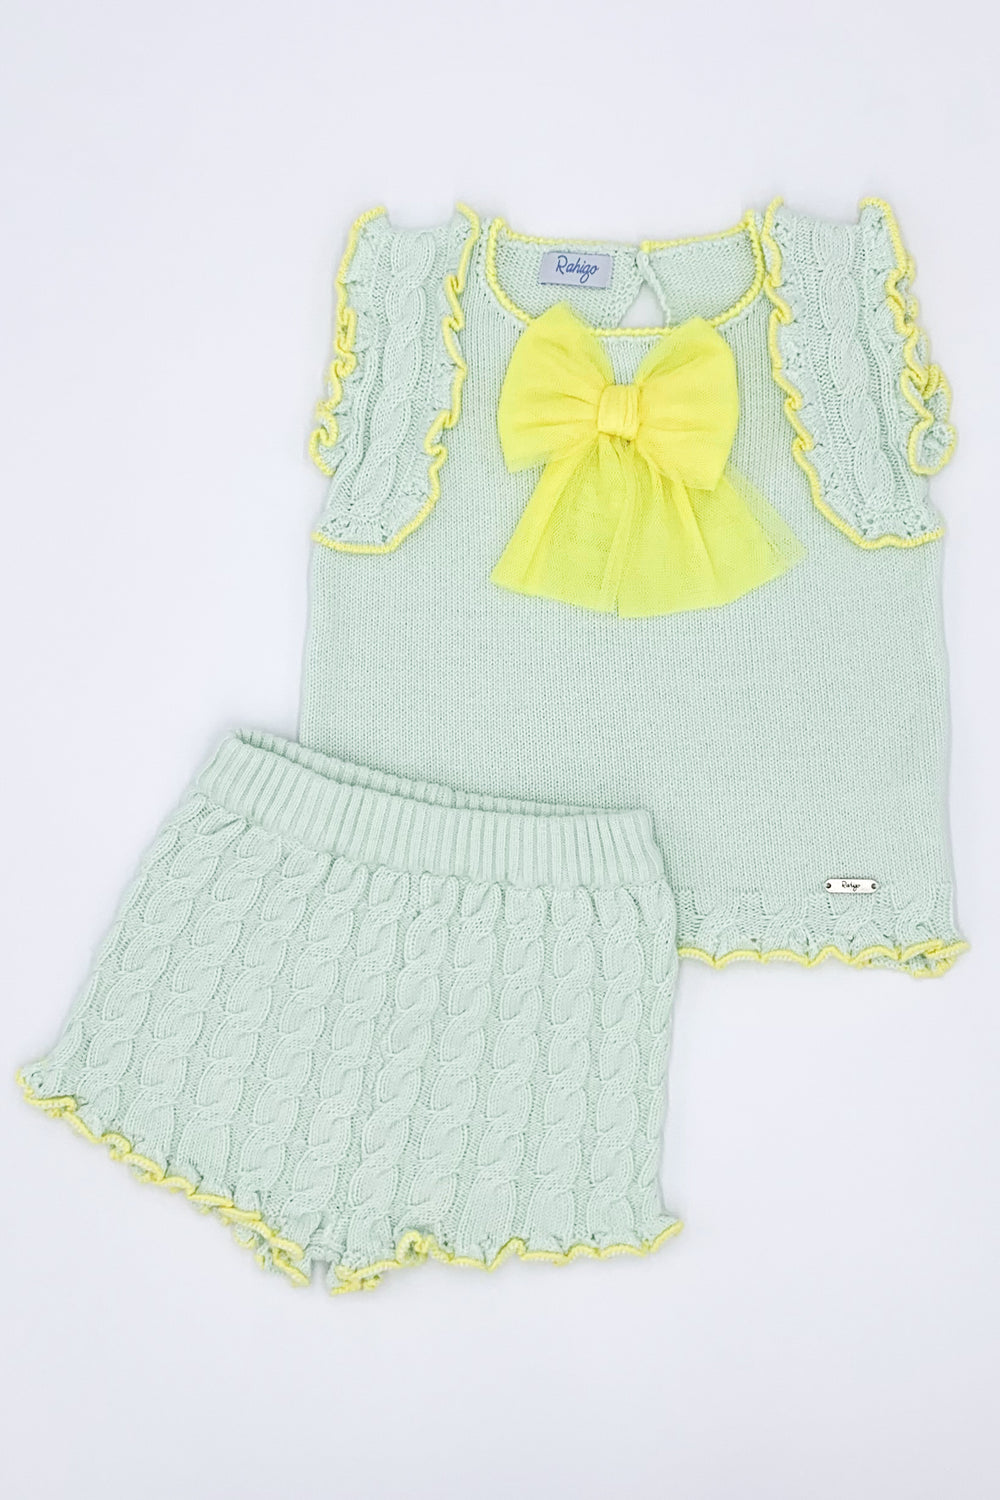 Rahigo PREORDER "Margot" Mint & Lemon Knit Top & Shorts | Millie and John